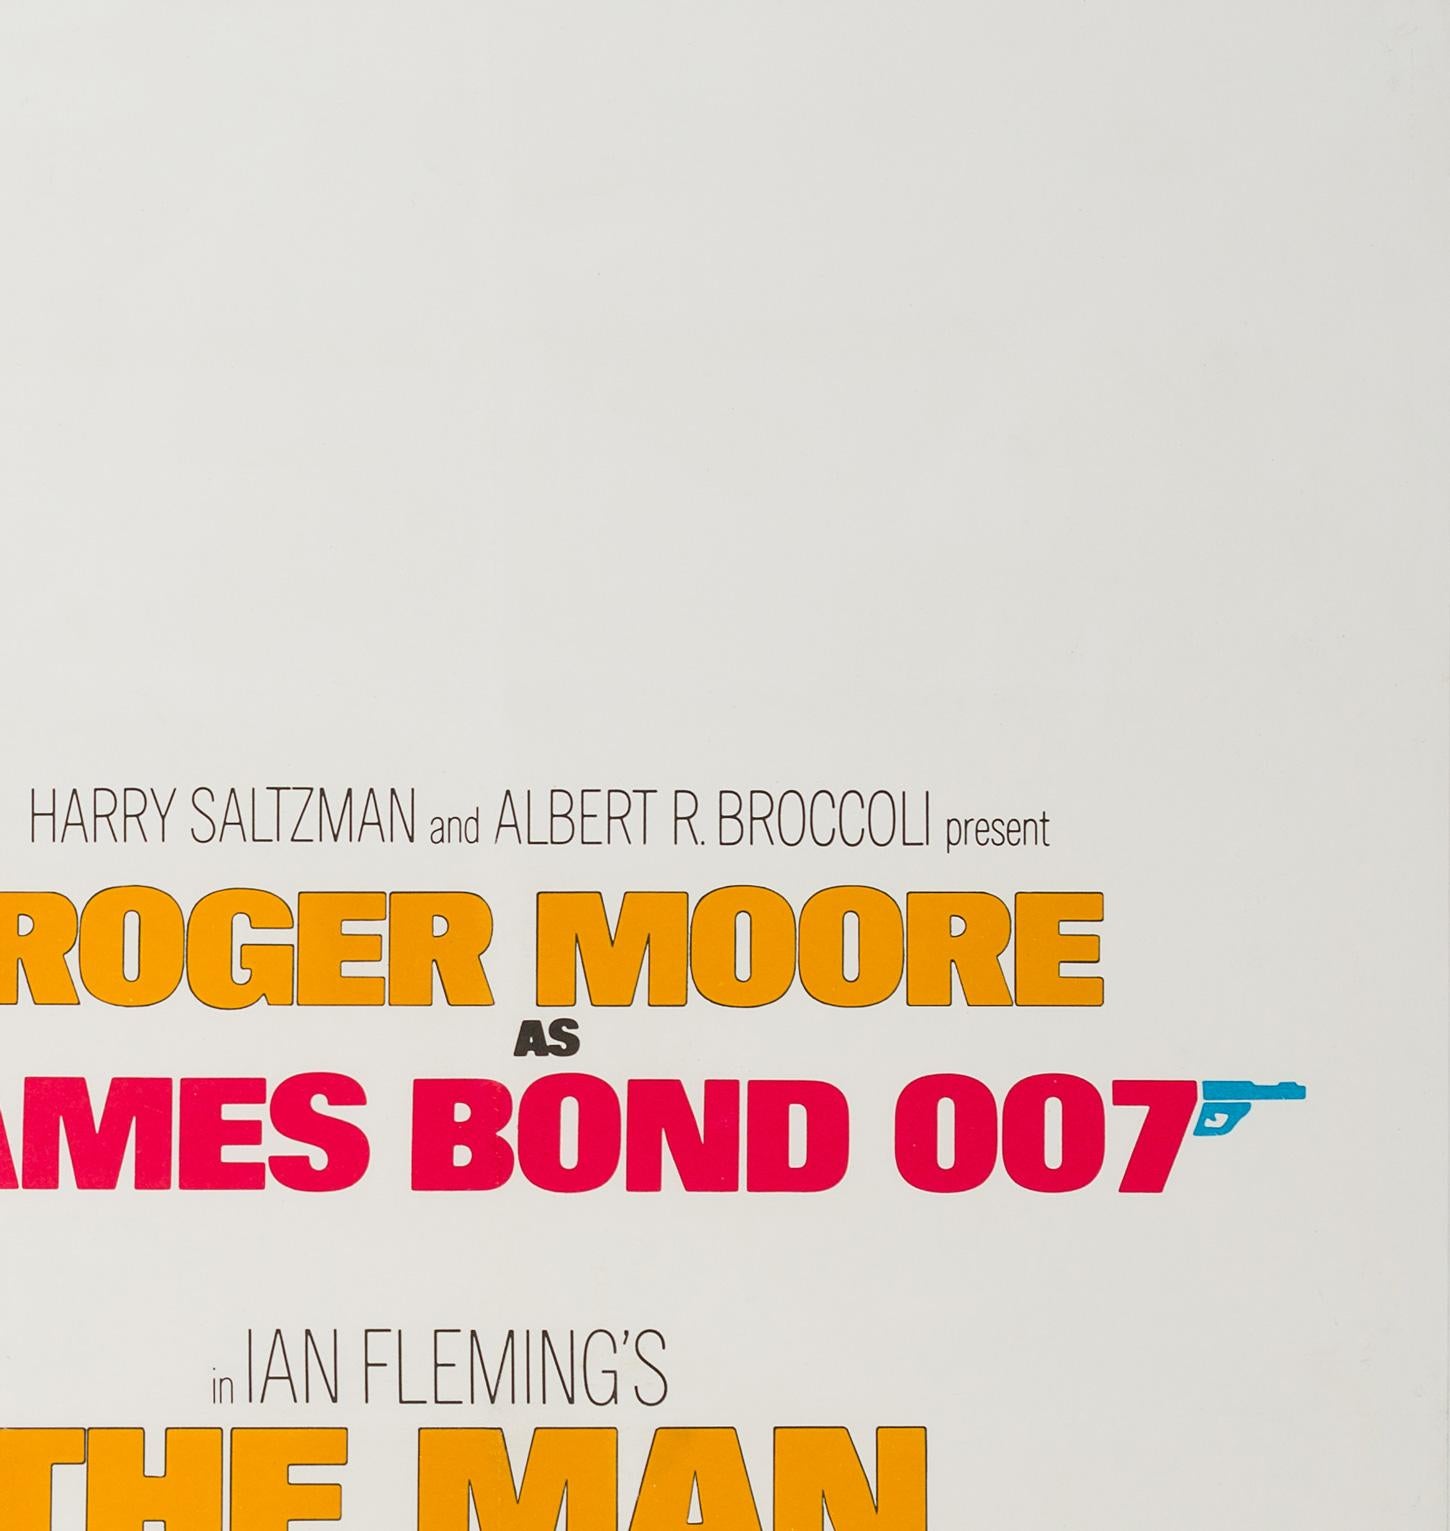 British Man with the Golden Gun, James Bond, UK Film Poster, Robert McGinnis, 1974